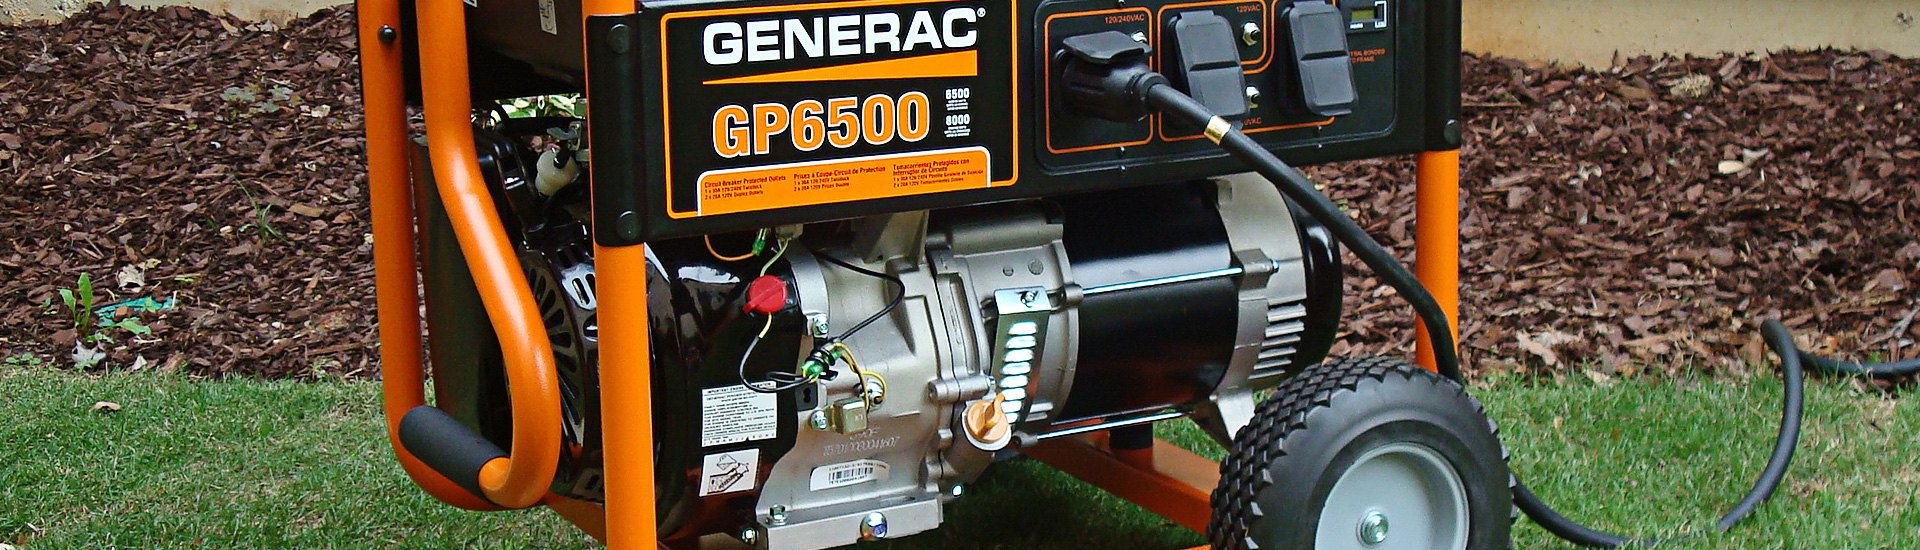 mi-t-m generator 8000